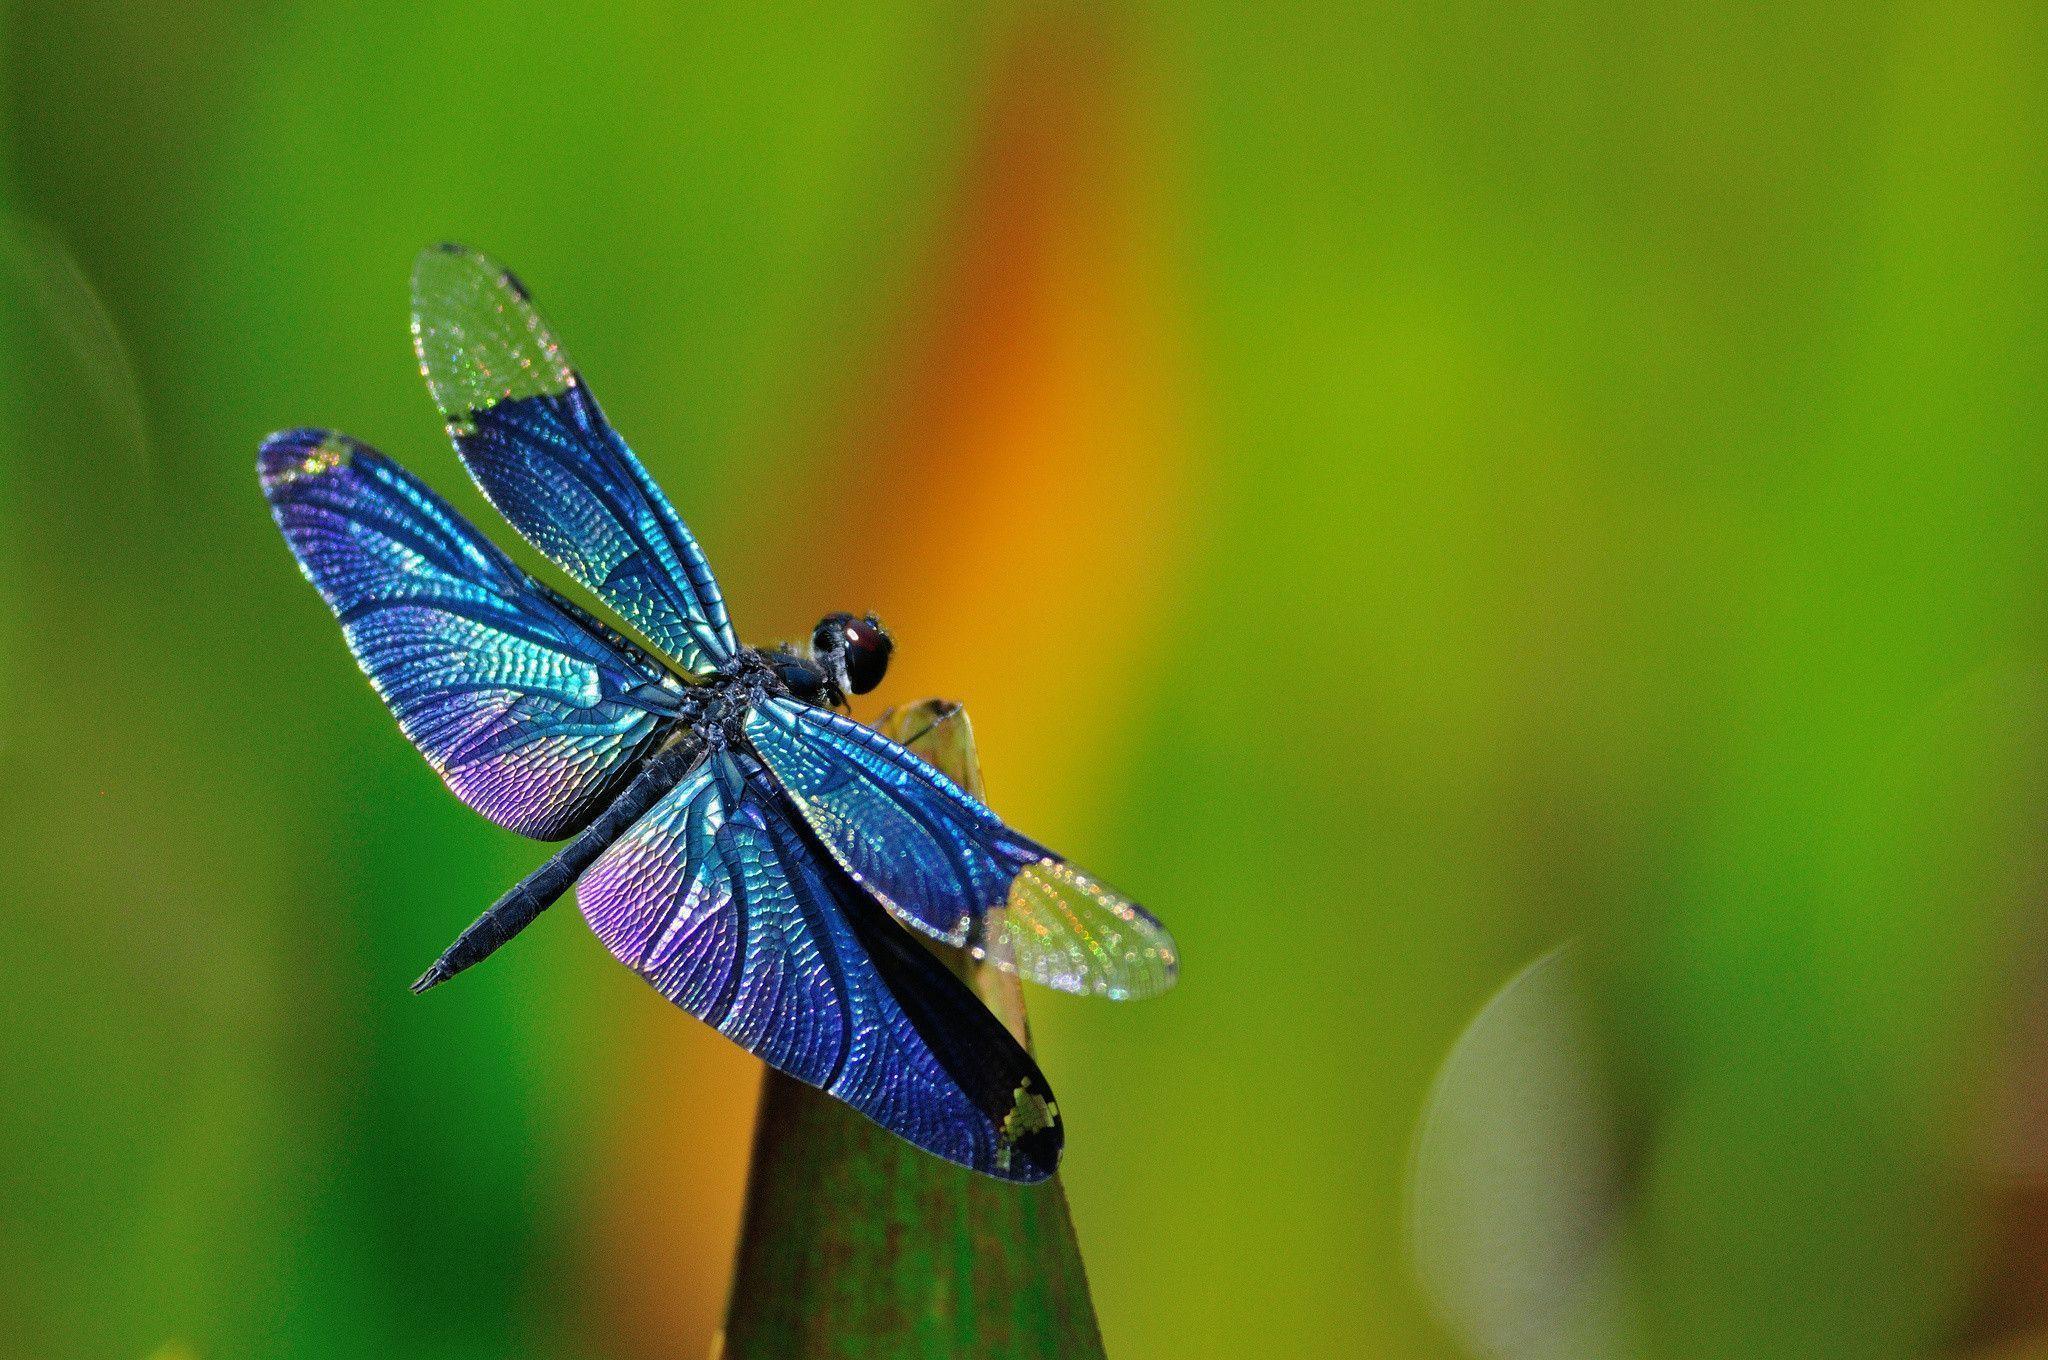 32527 Dragonfly Wallpaper Images Stock Photos  Vectors  Shutterstock